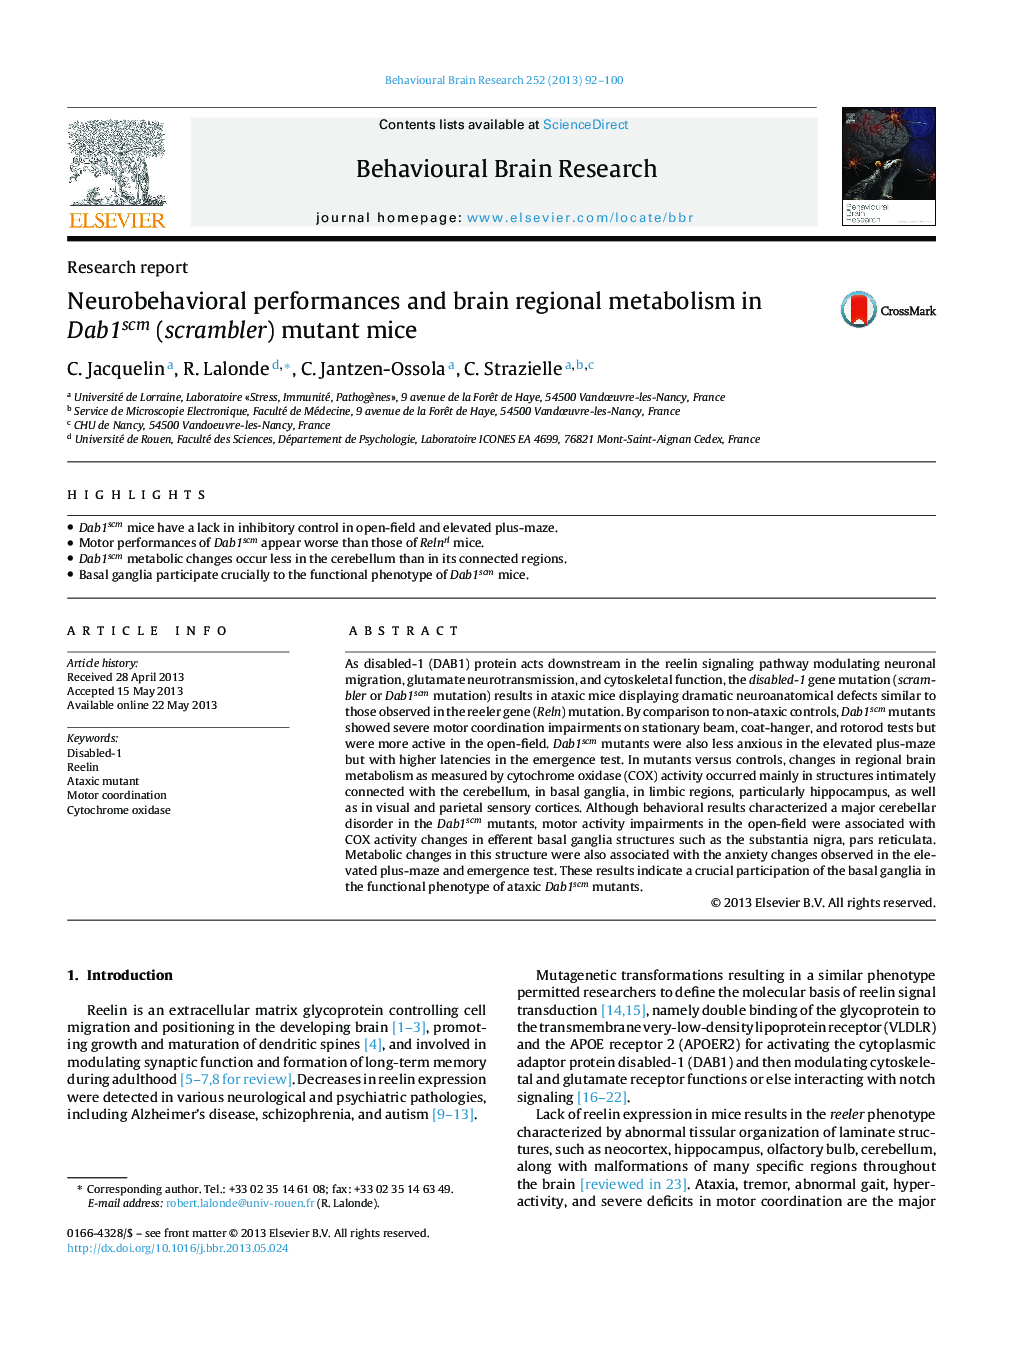 Neurobehavioral performances and brain regional metabolism in Dab1scm (scrambler) mutant mice